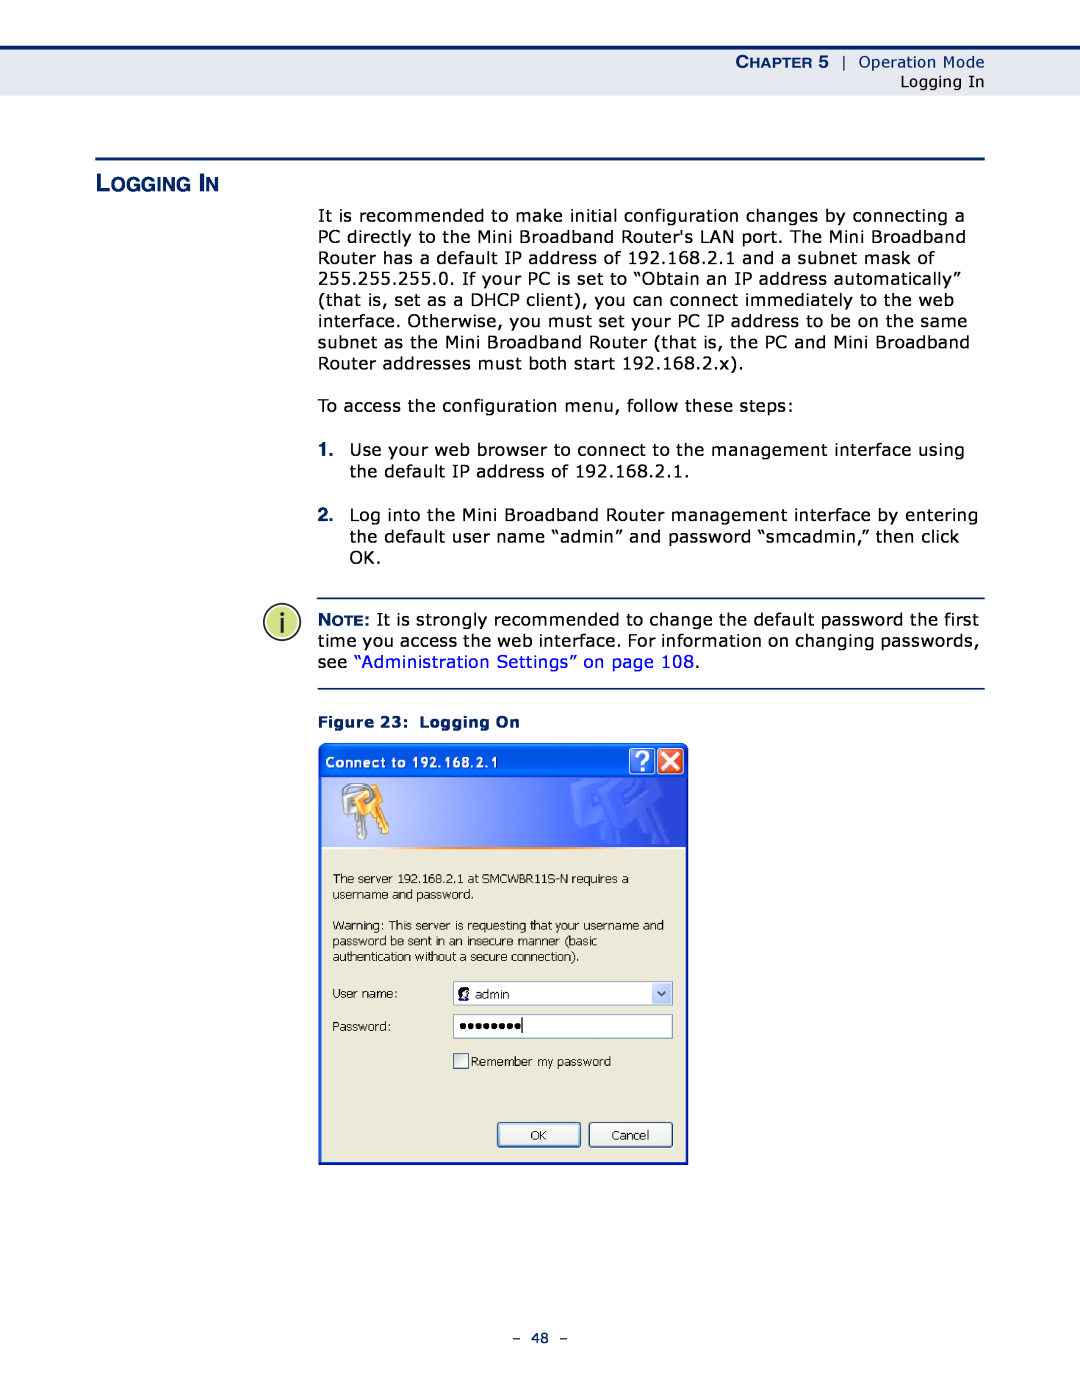 SMC Networks SMCWBR11S-N manual Logging In, Logging On 